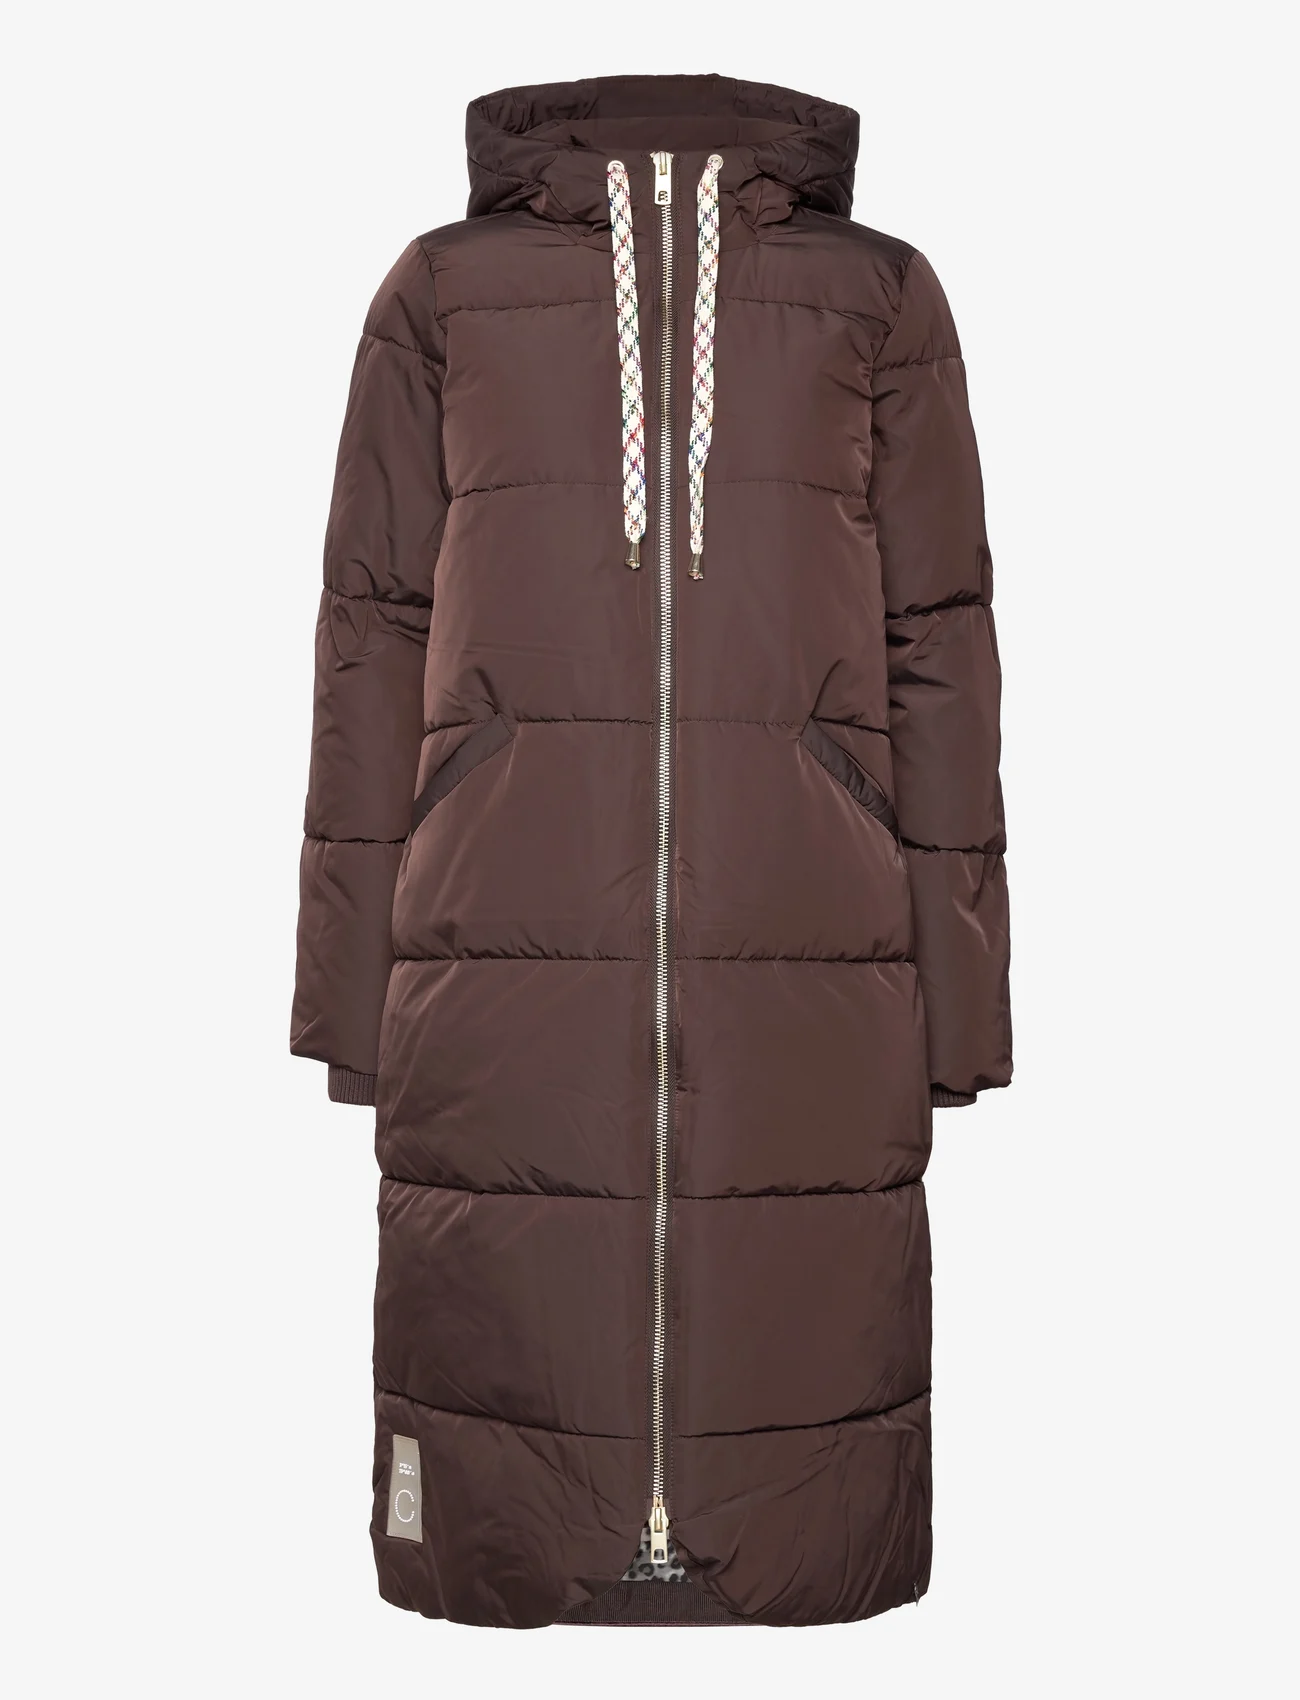 Coster Copenhagen - Puffer jacket - wintermäntel - dark brown - 0